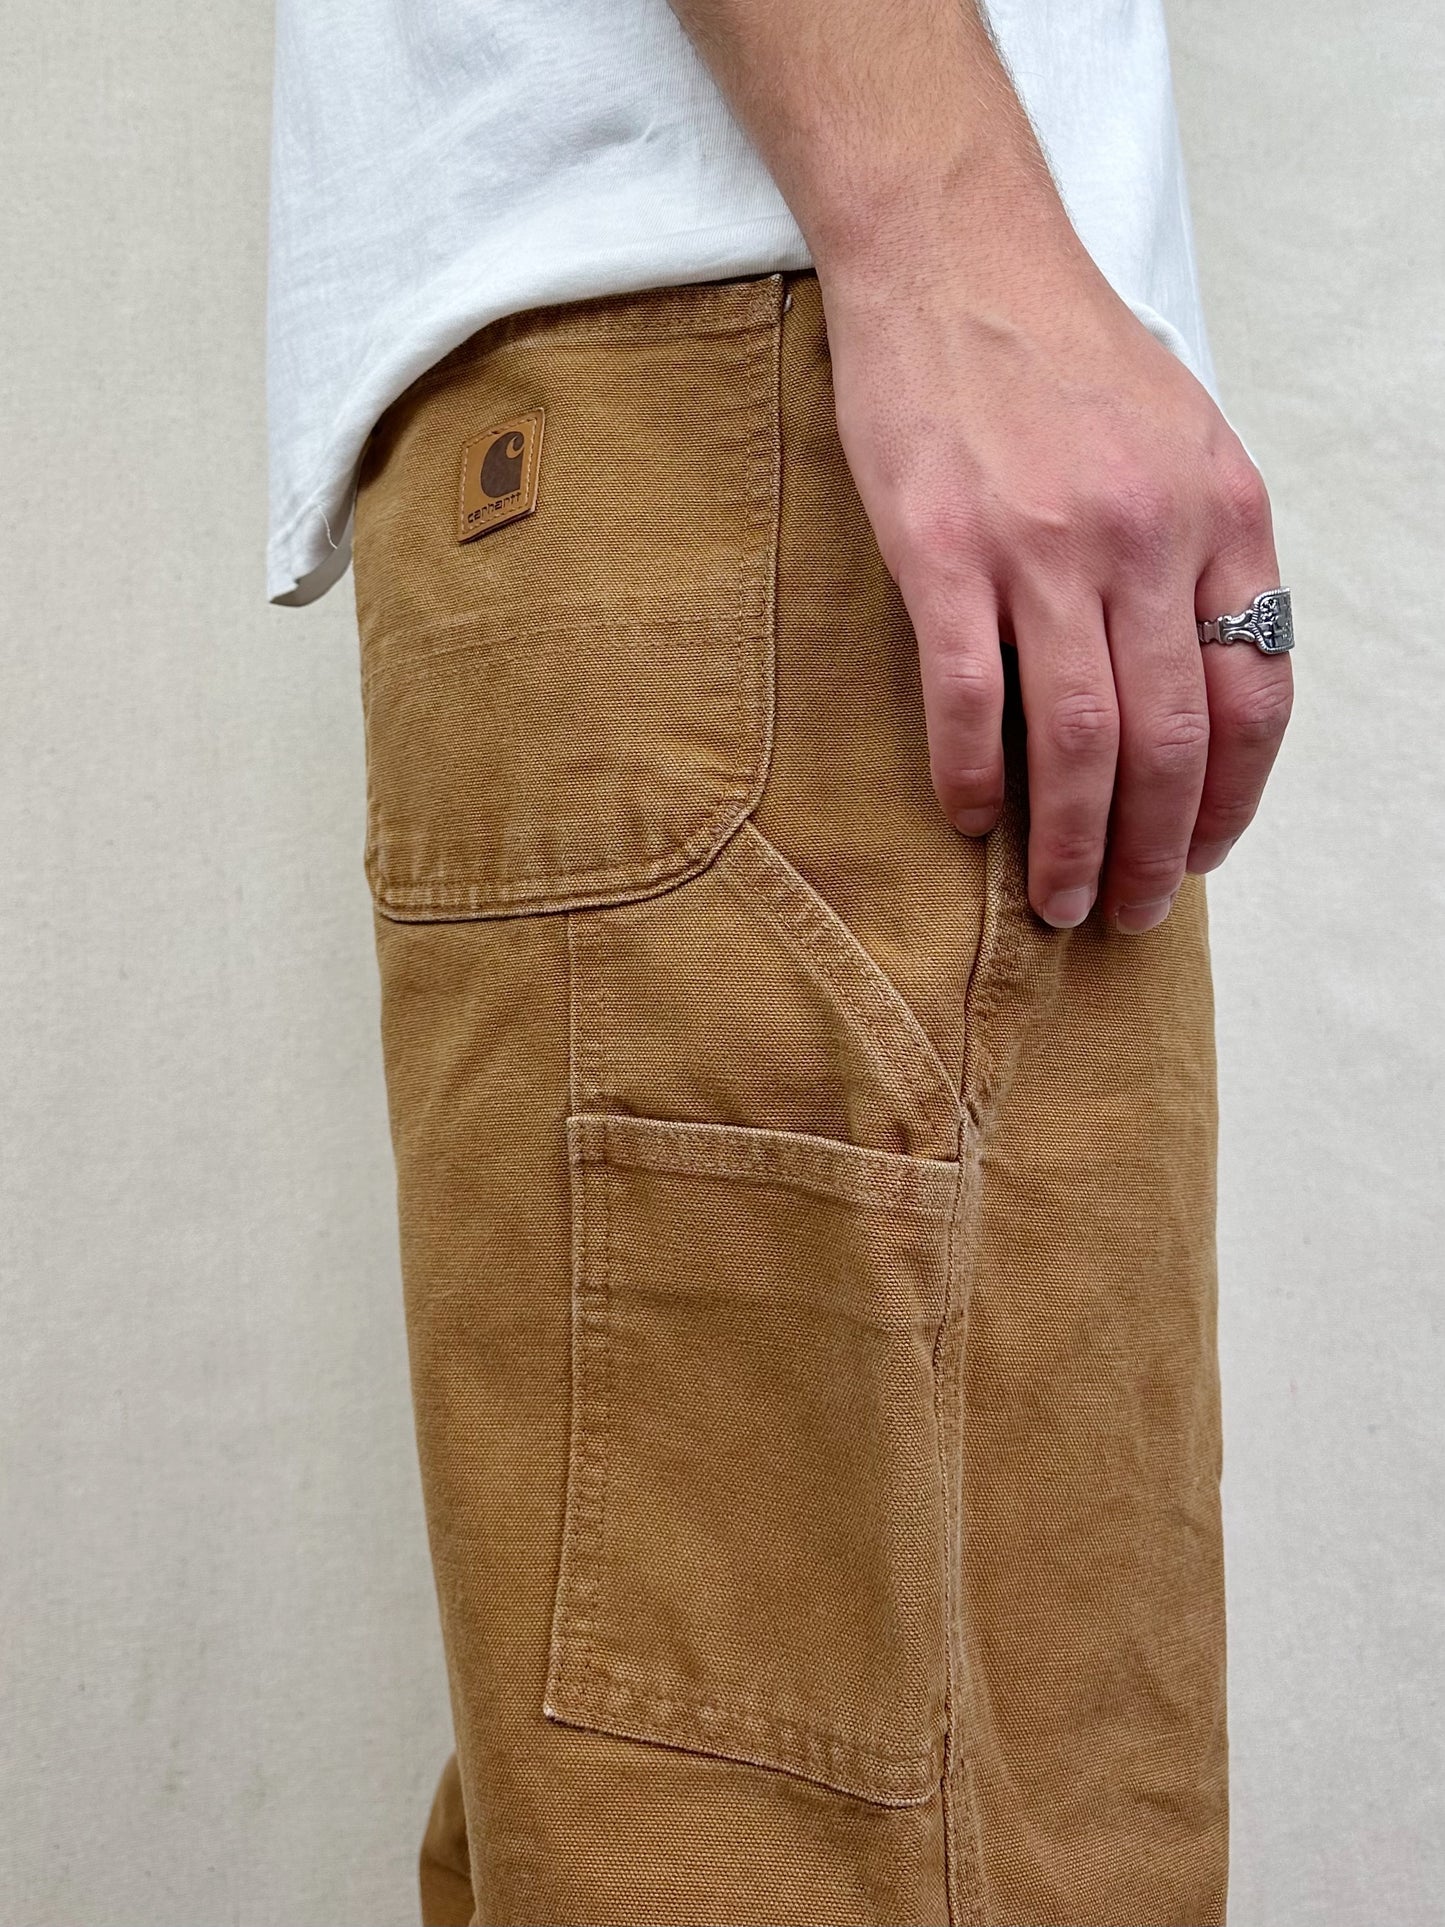 90's Carhartt Vintage Carpenter Jeans Size 32x30